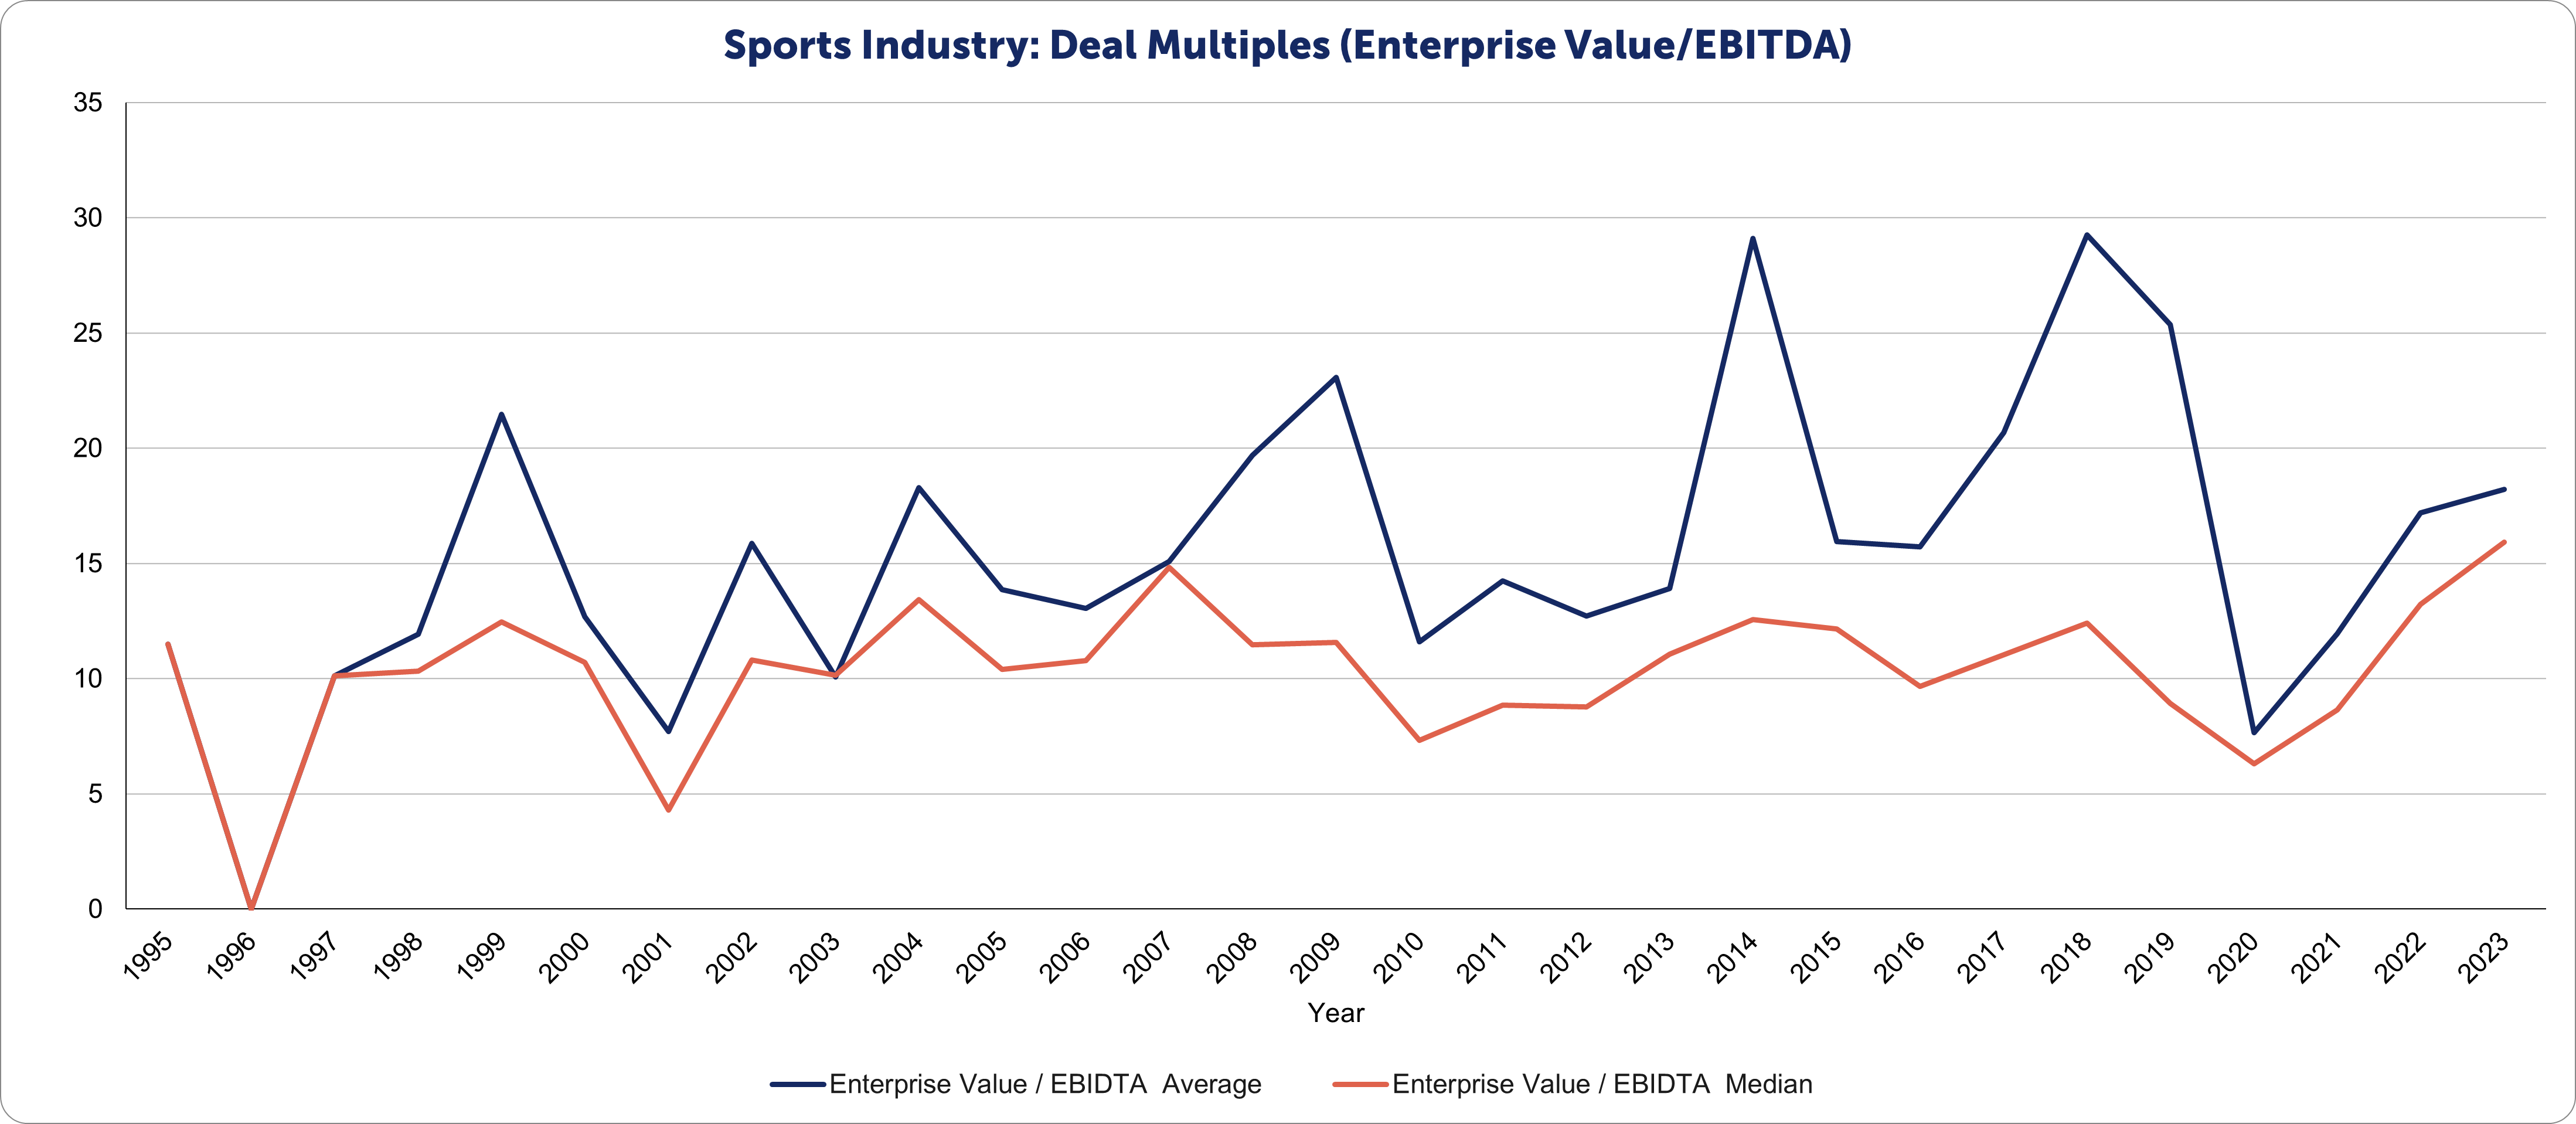 EV/EBITDA M&A Activity for Sports Services